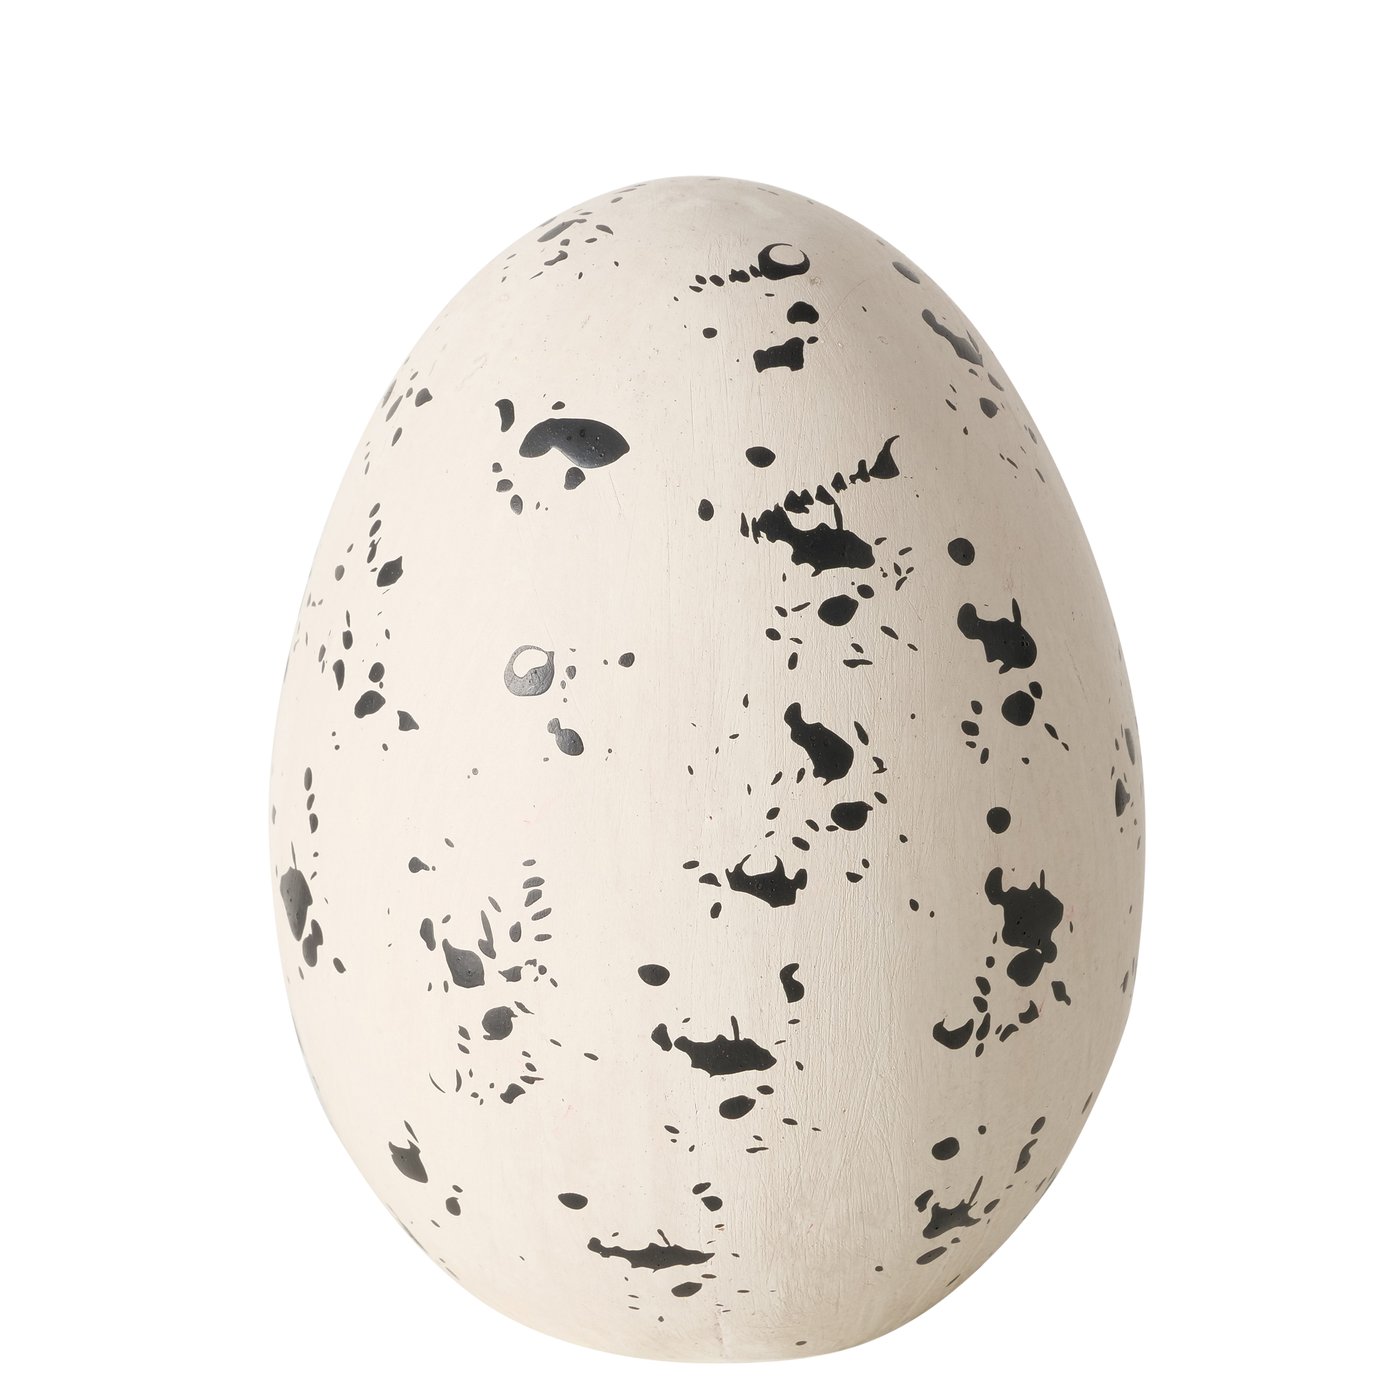 &Quirky Terracotta Bird Egg Ornament